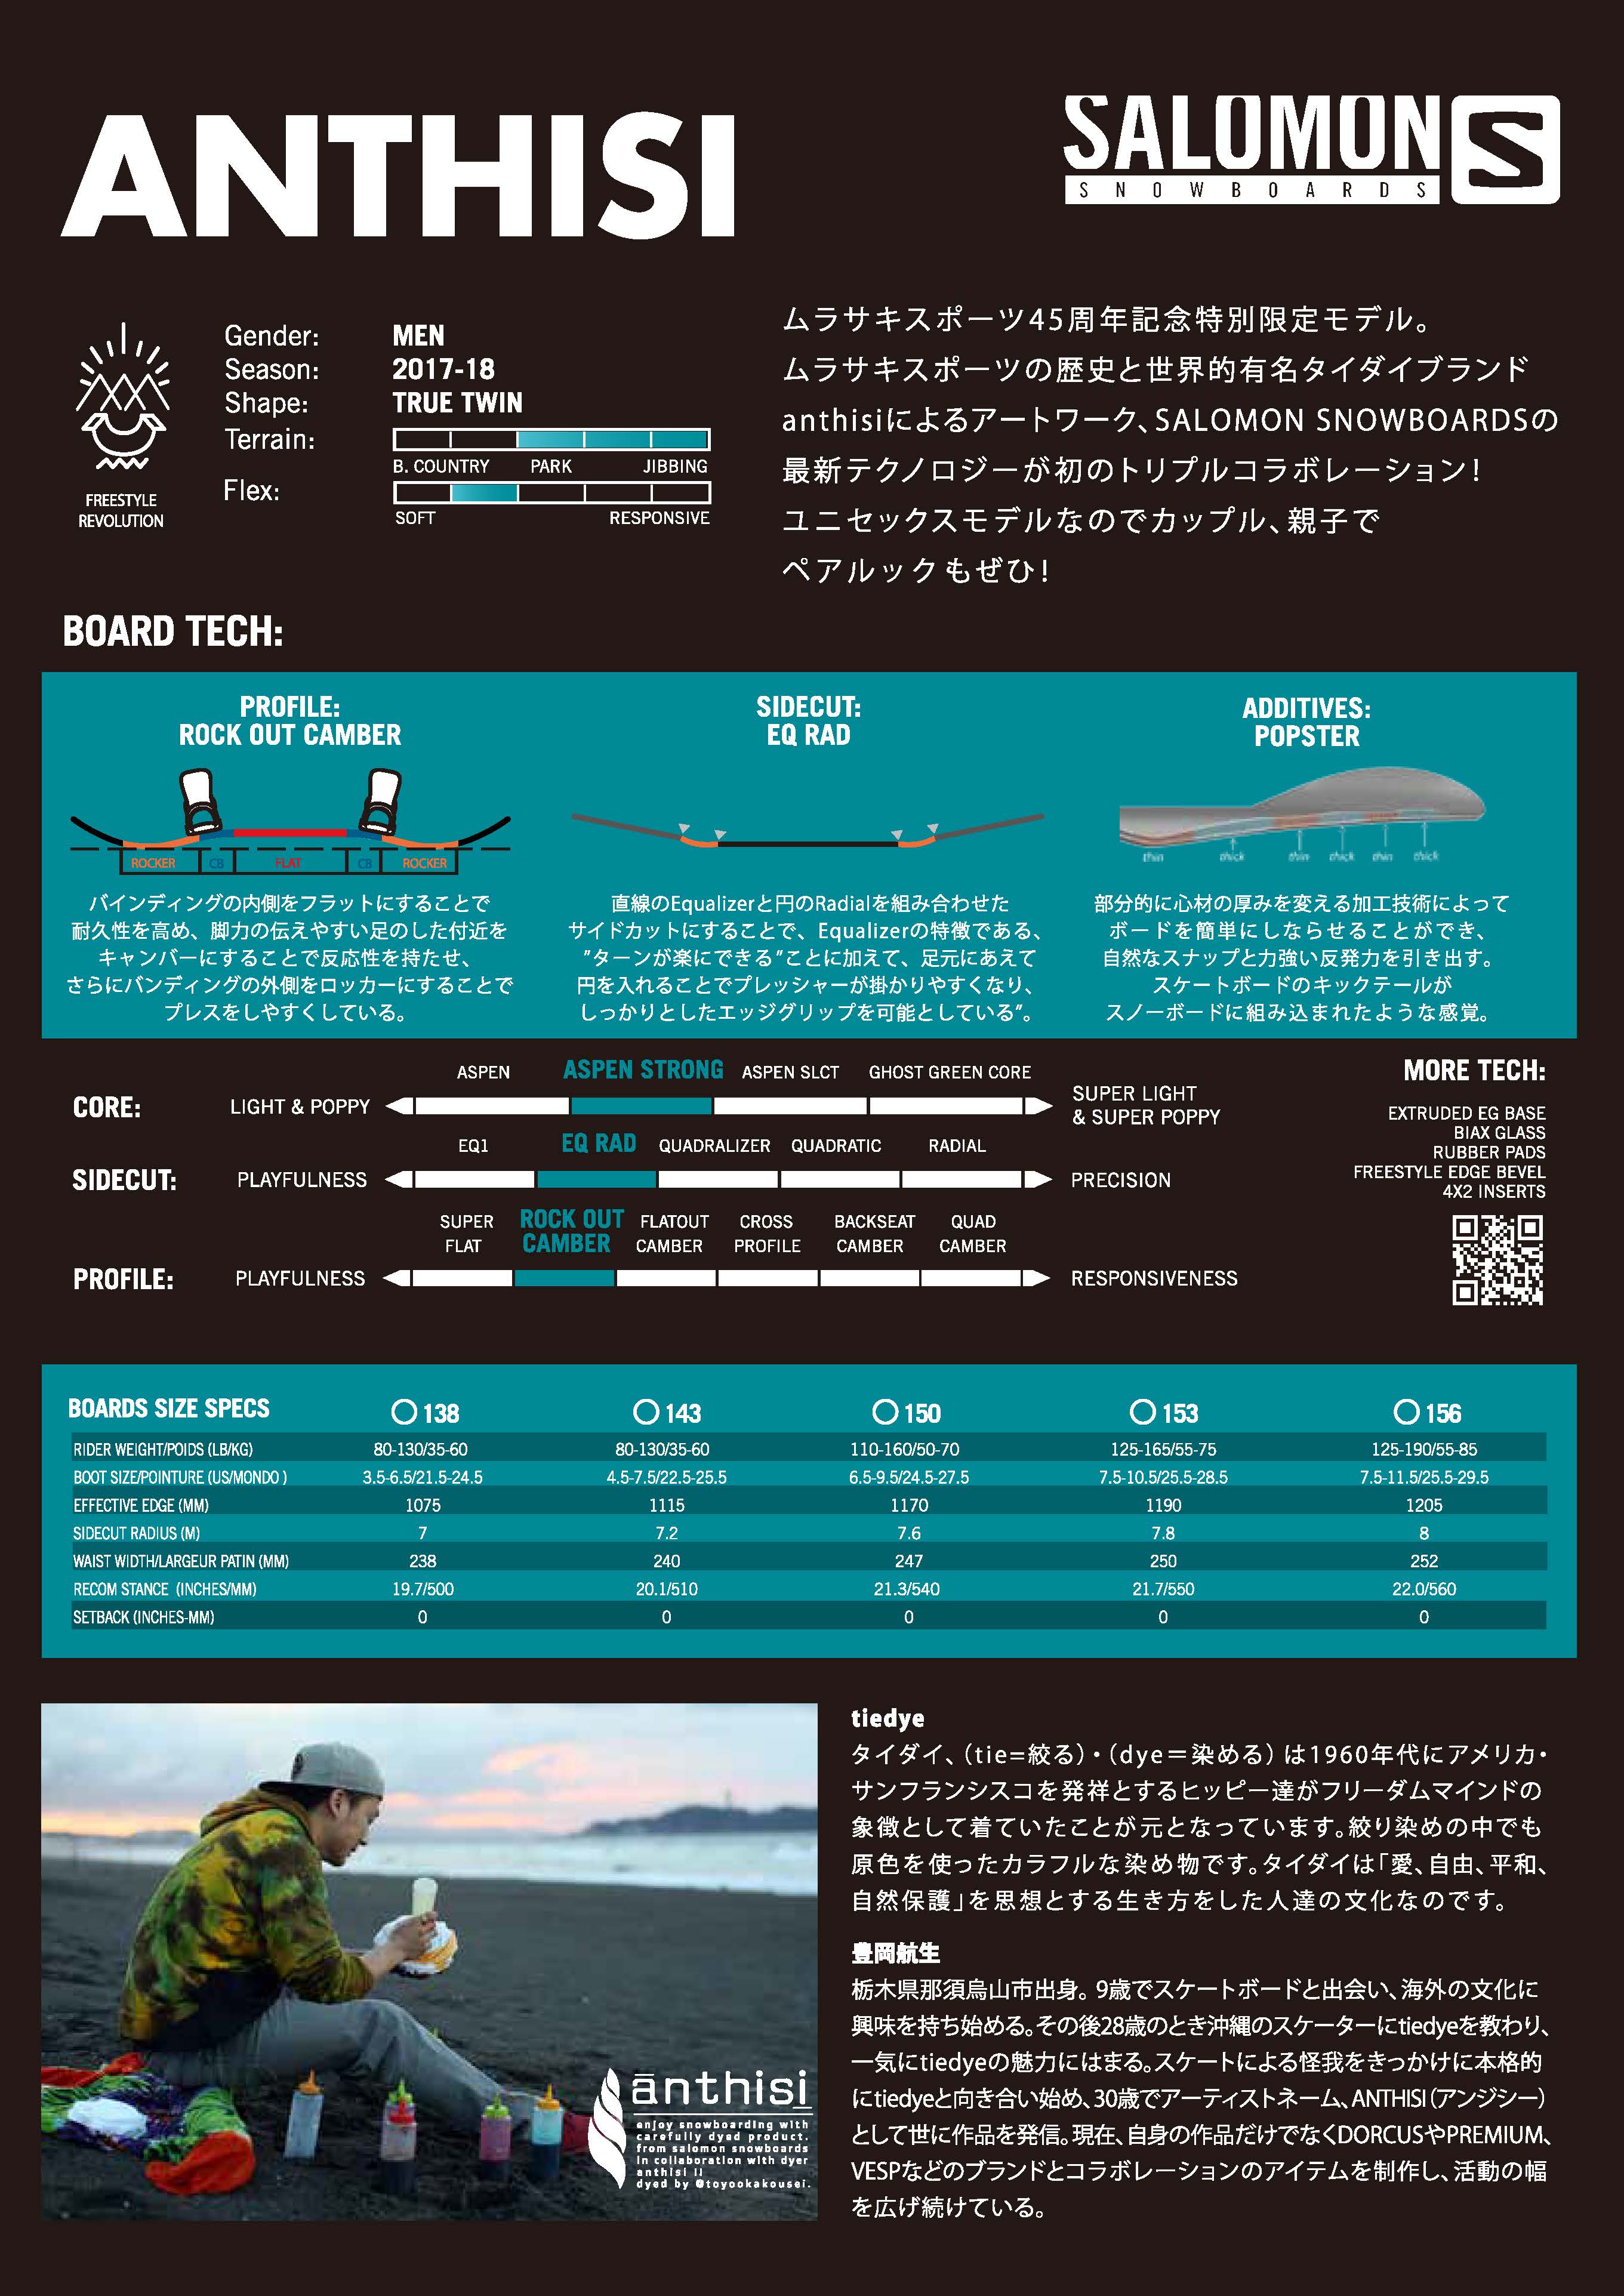 SALOMON×ANTHISI의 무라사키 스포츠 45주년 기념 특별 모델! | 스노보딩 WEB 미디어 SBN FREERUN JAPAN